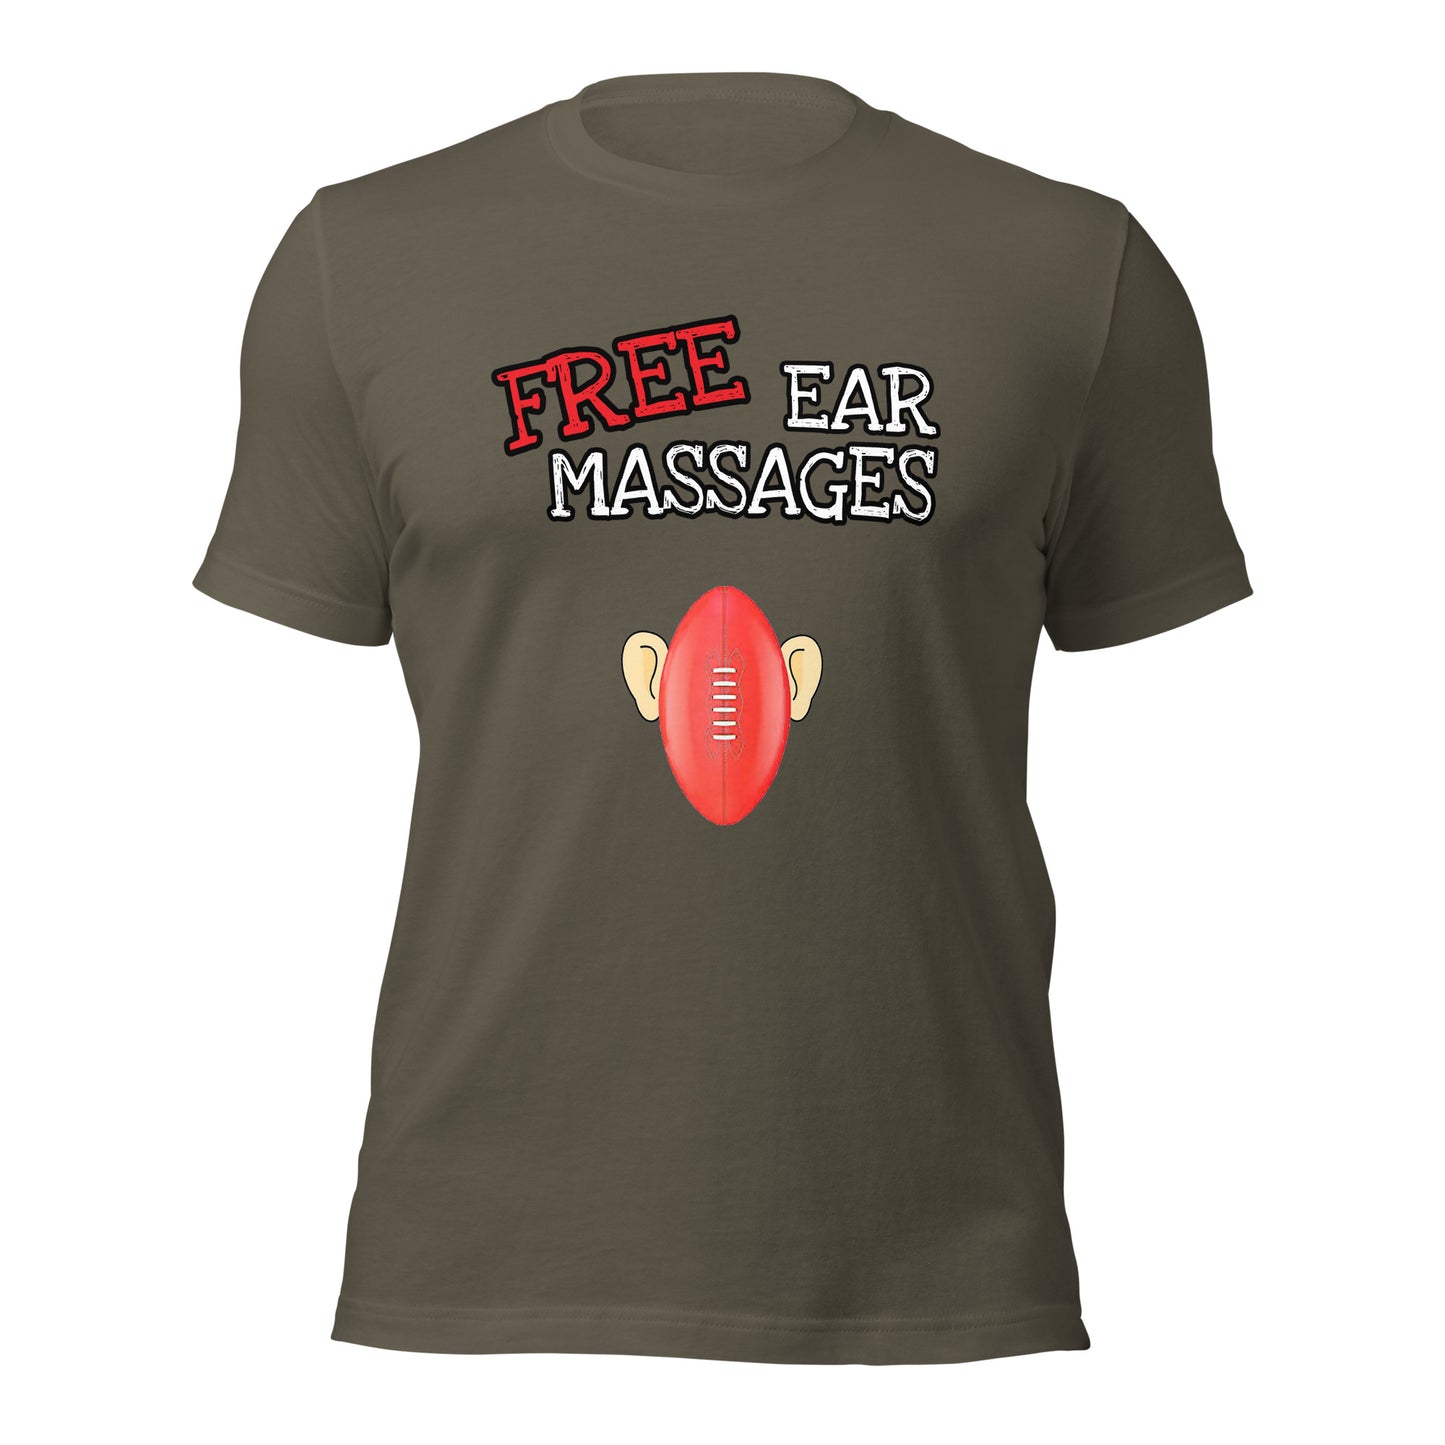 Free ear massages